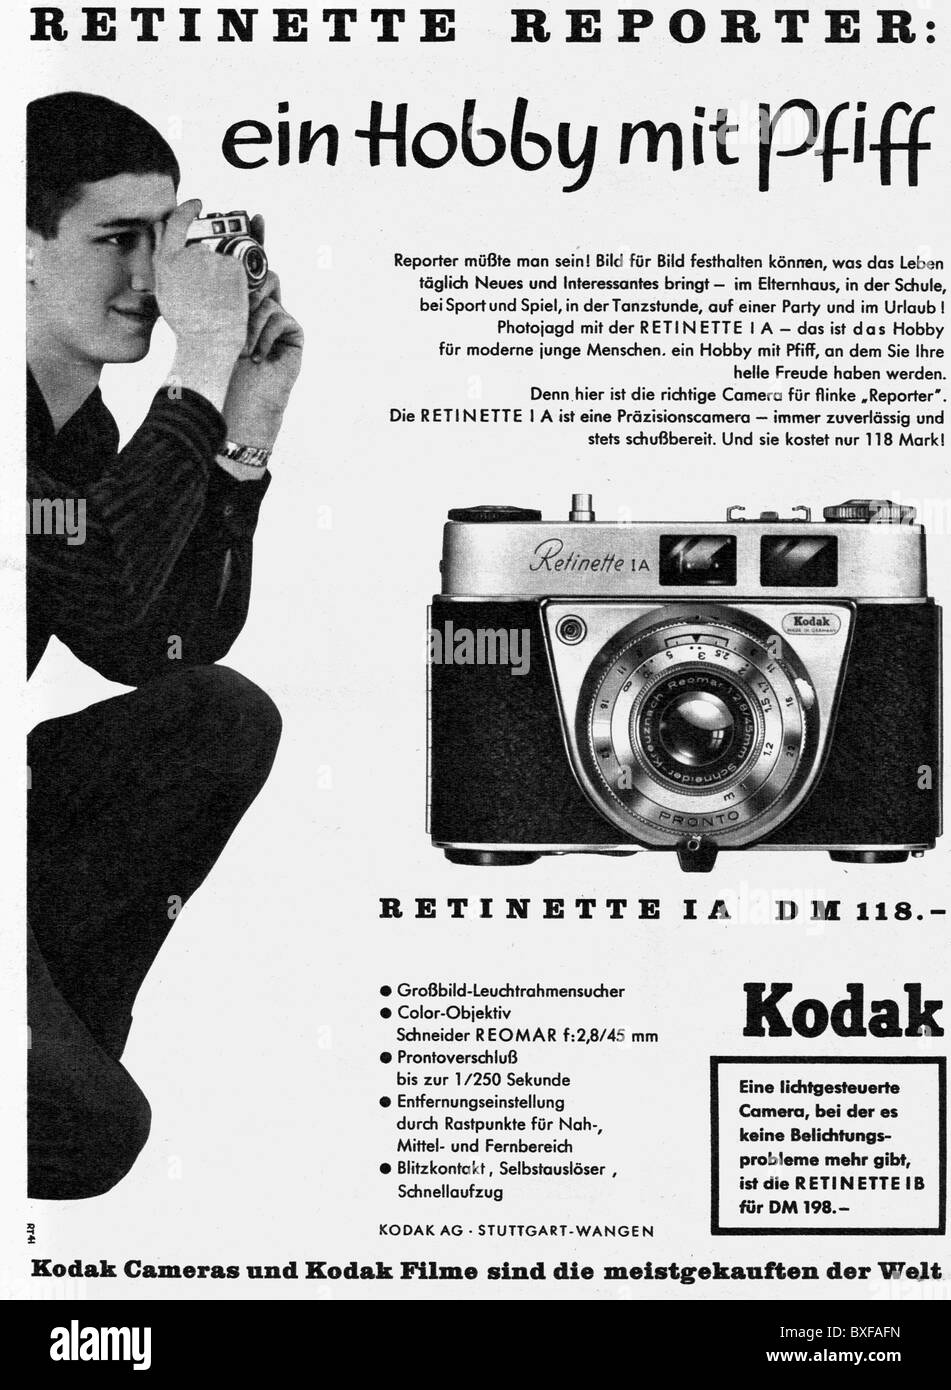 Kodak Retinette appareil photo IB avec objectif RODENSTOCK REOMAR 2,8/45 